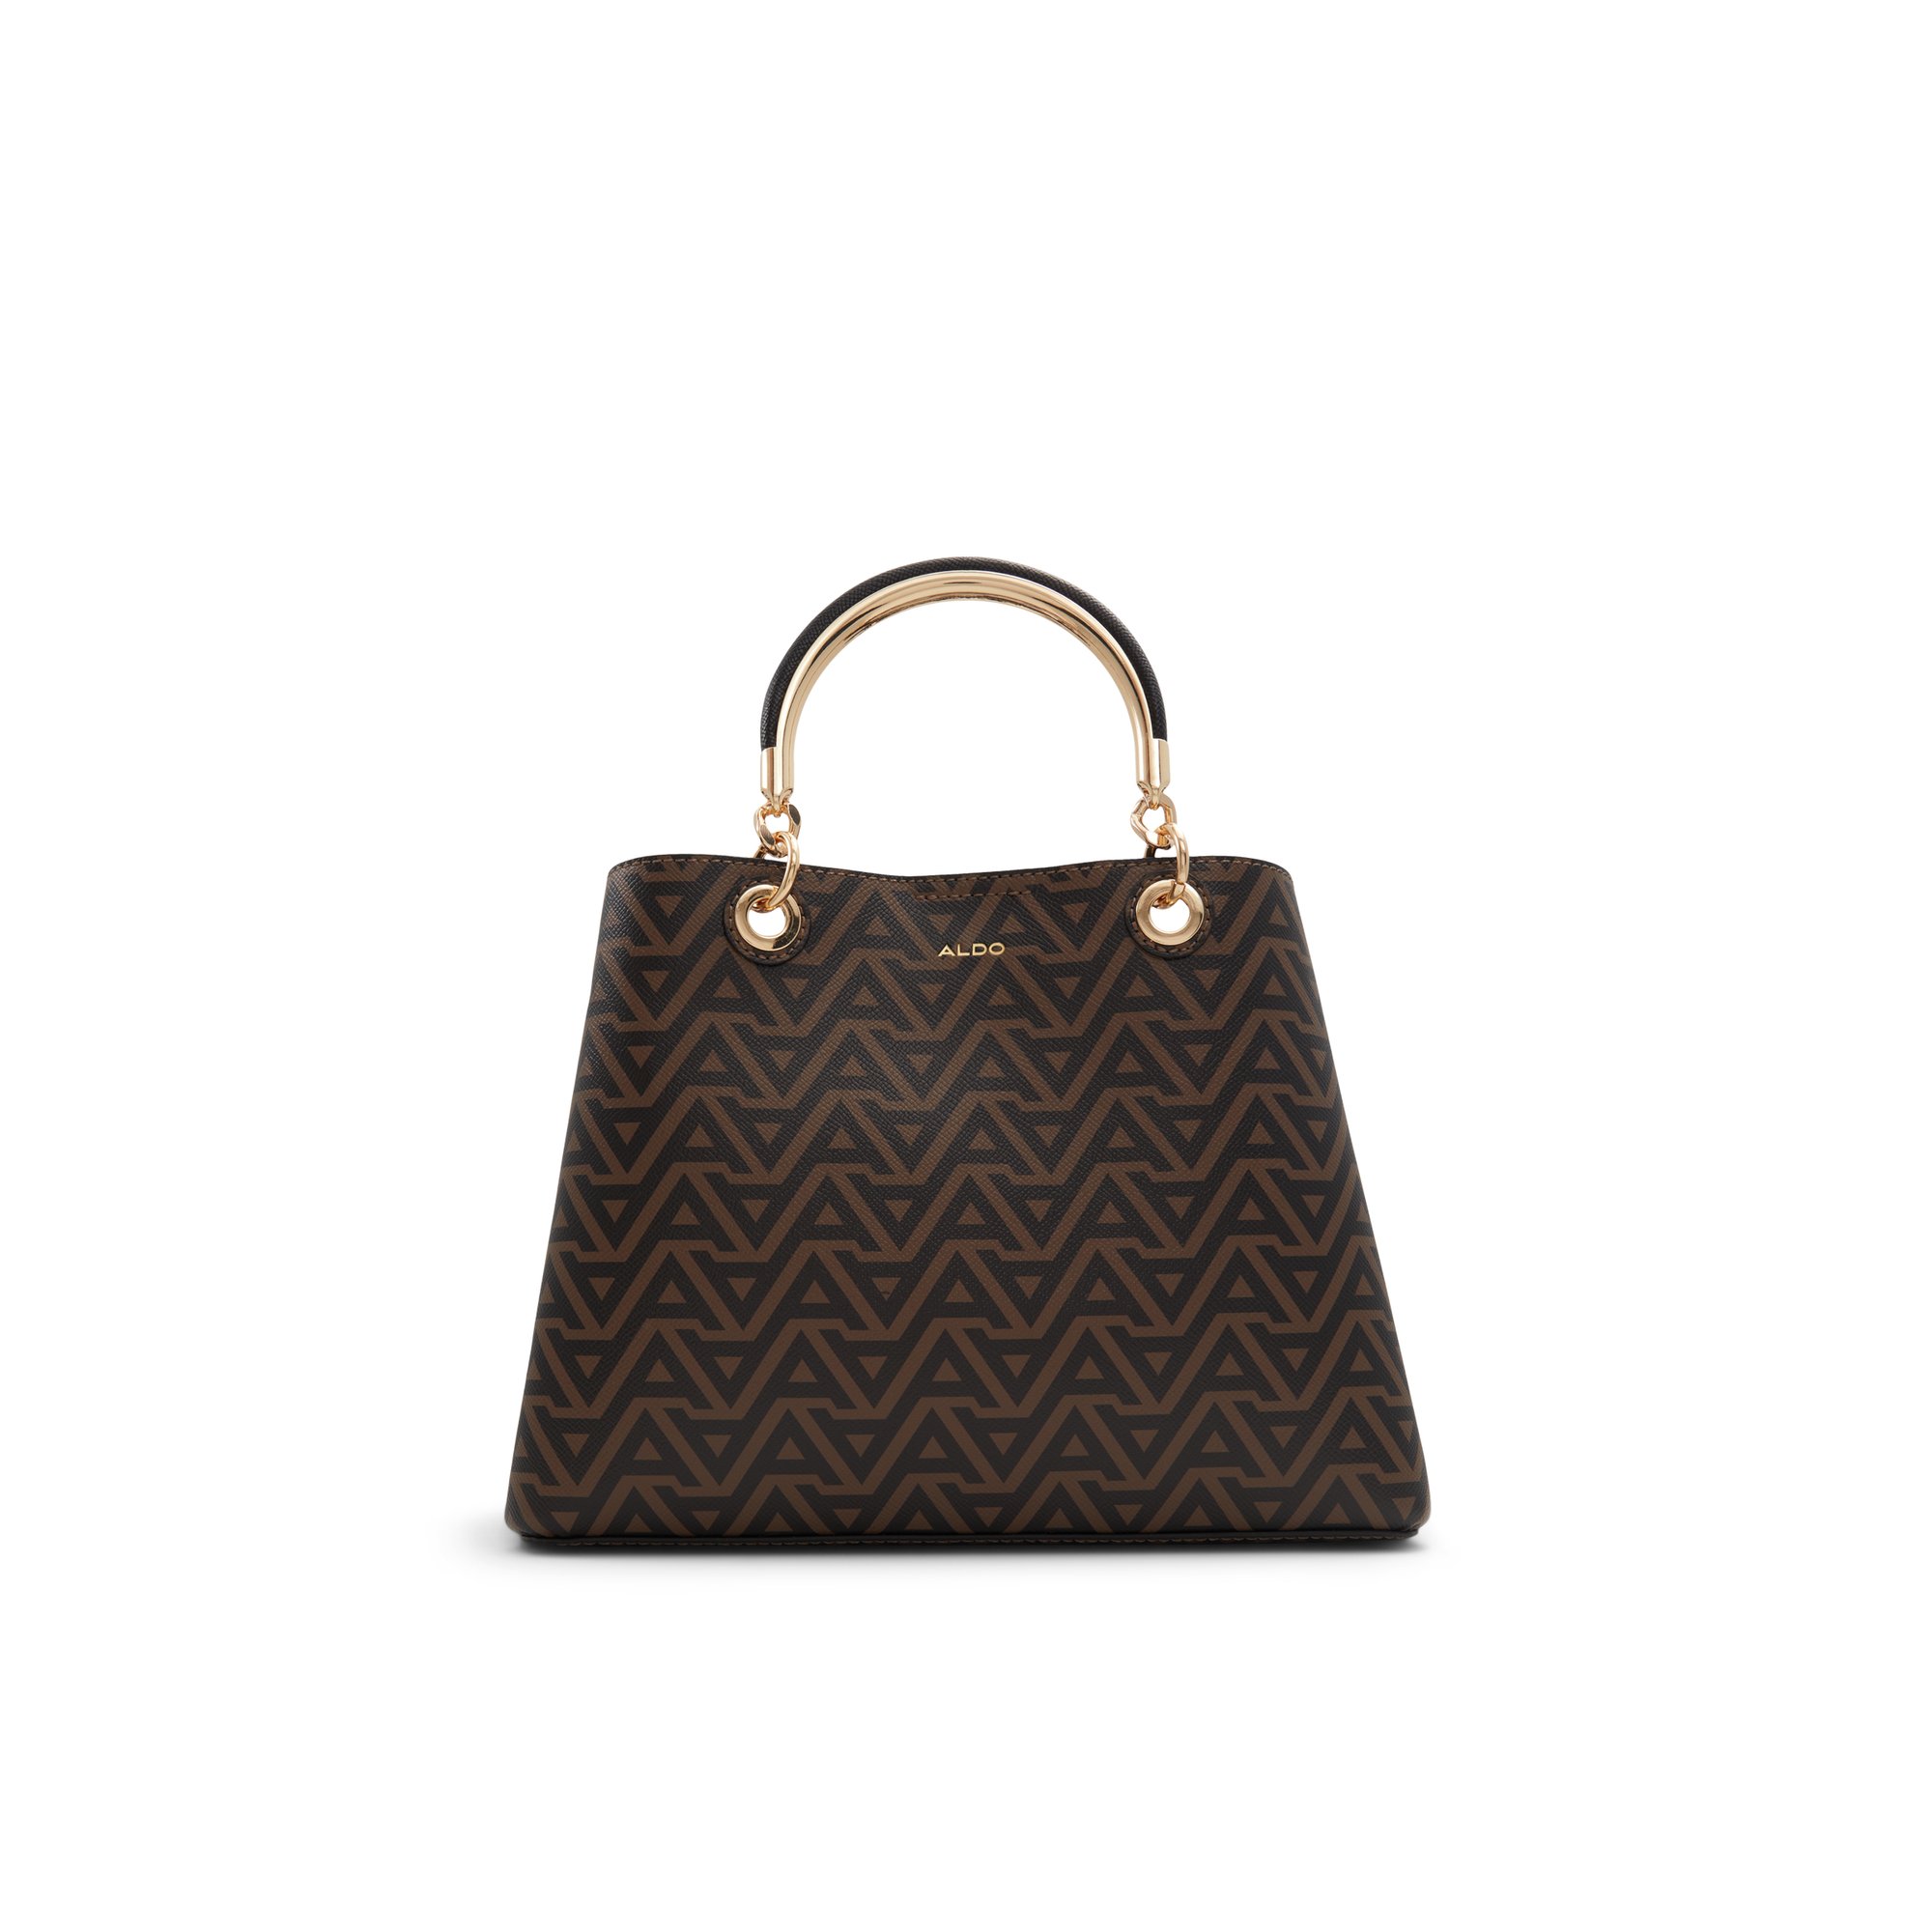 ALDO Surgoine - Women's Handbags Totes - Brown